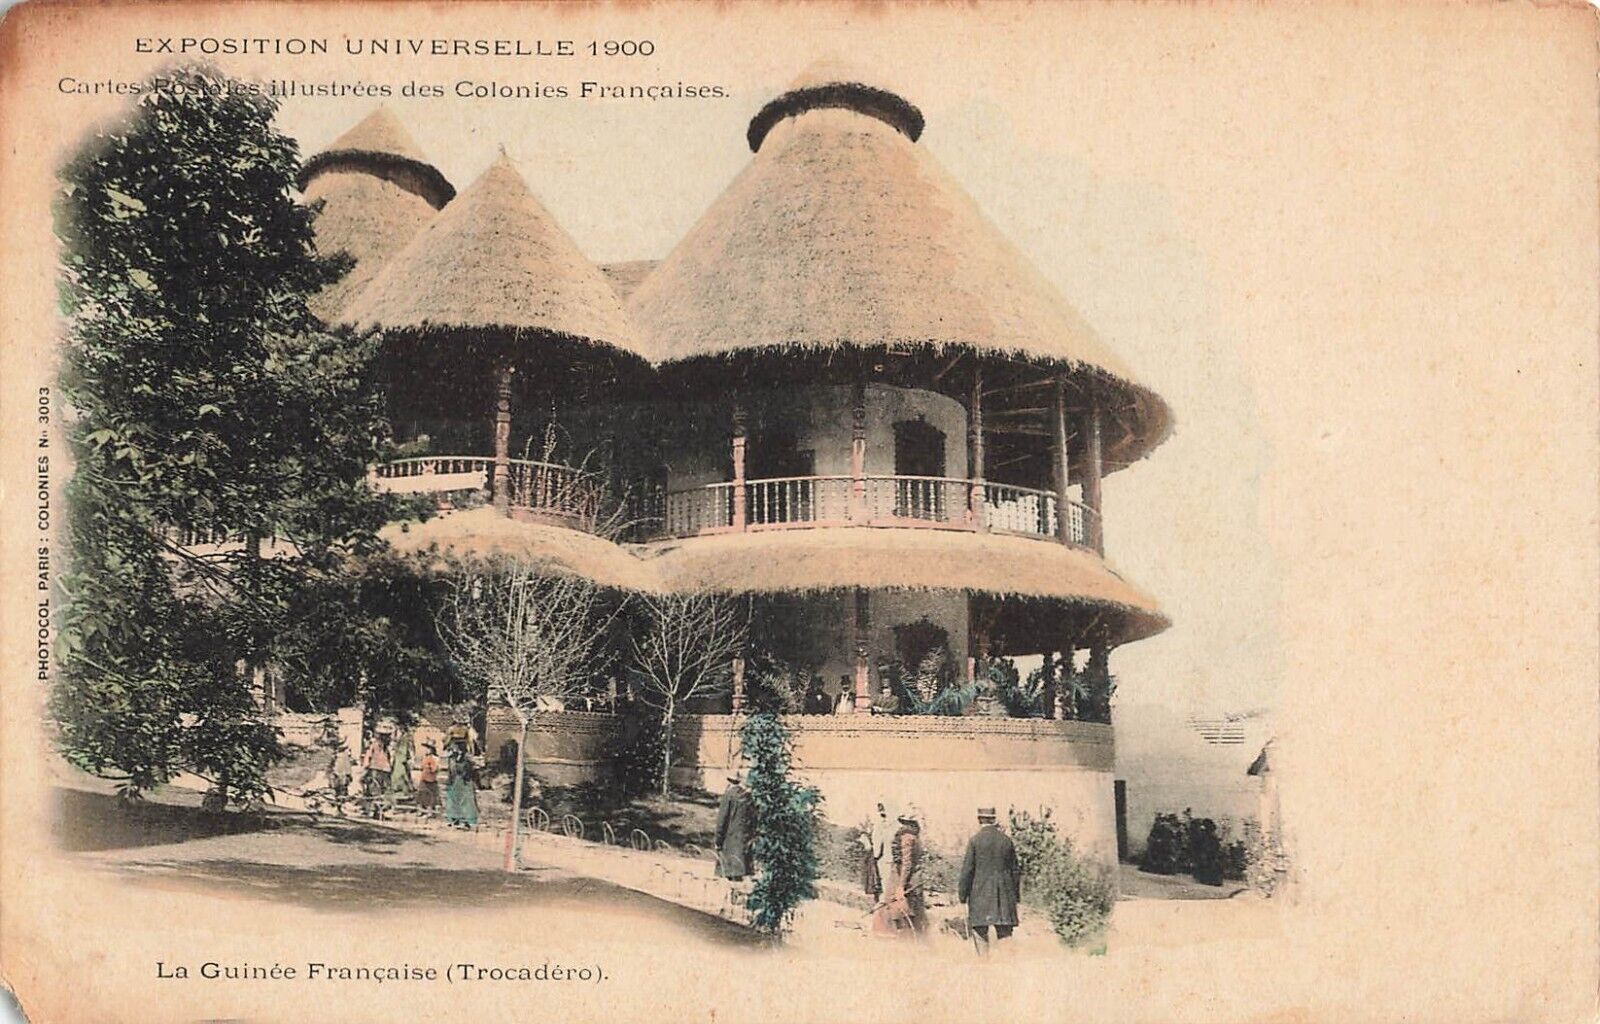 Postcard Paris, FR: Exposition Universelle 1900, French Guinea